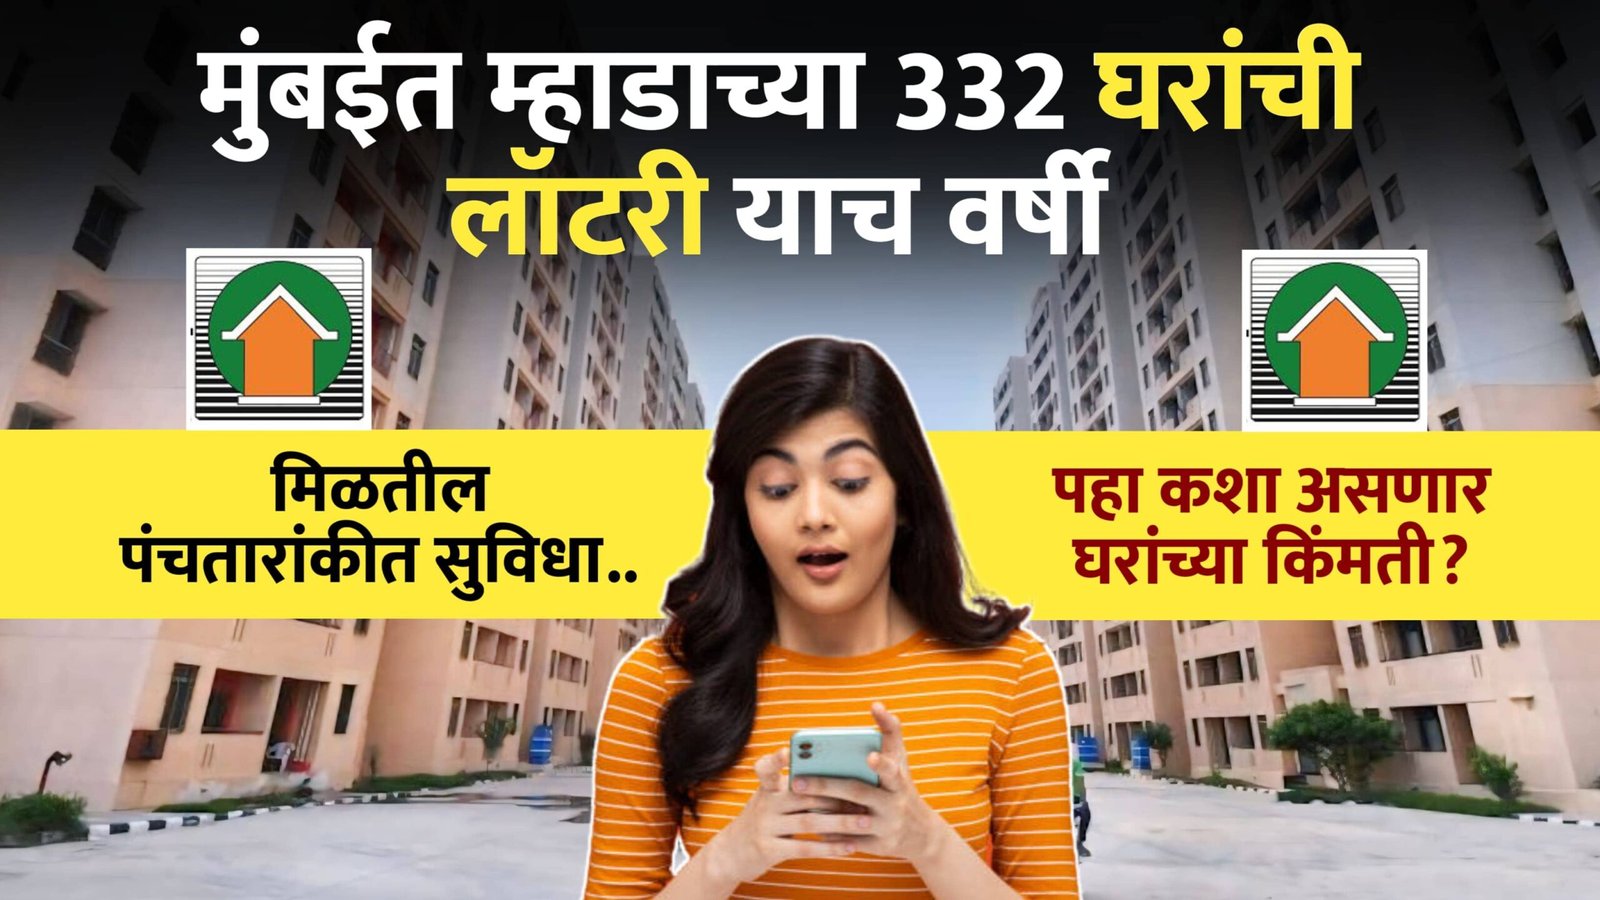 Lottery of 332 houses of MHADA in Mumbai this year